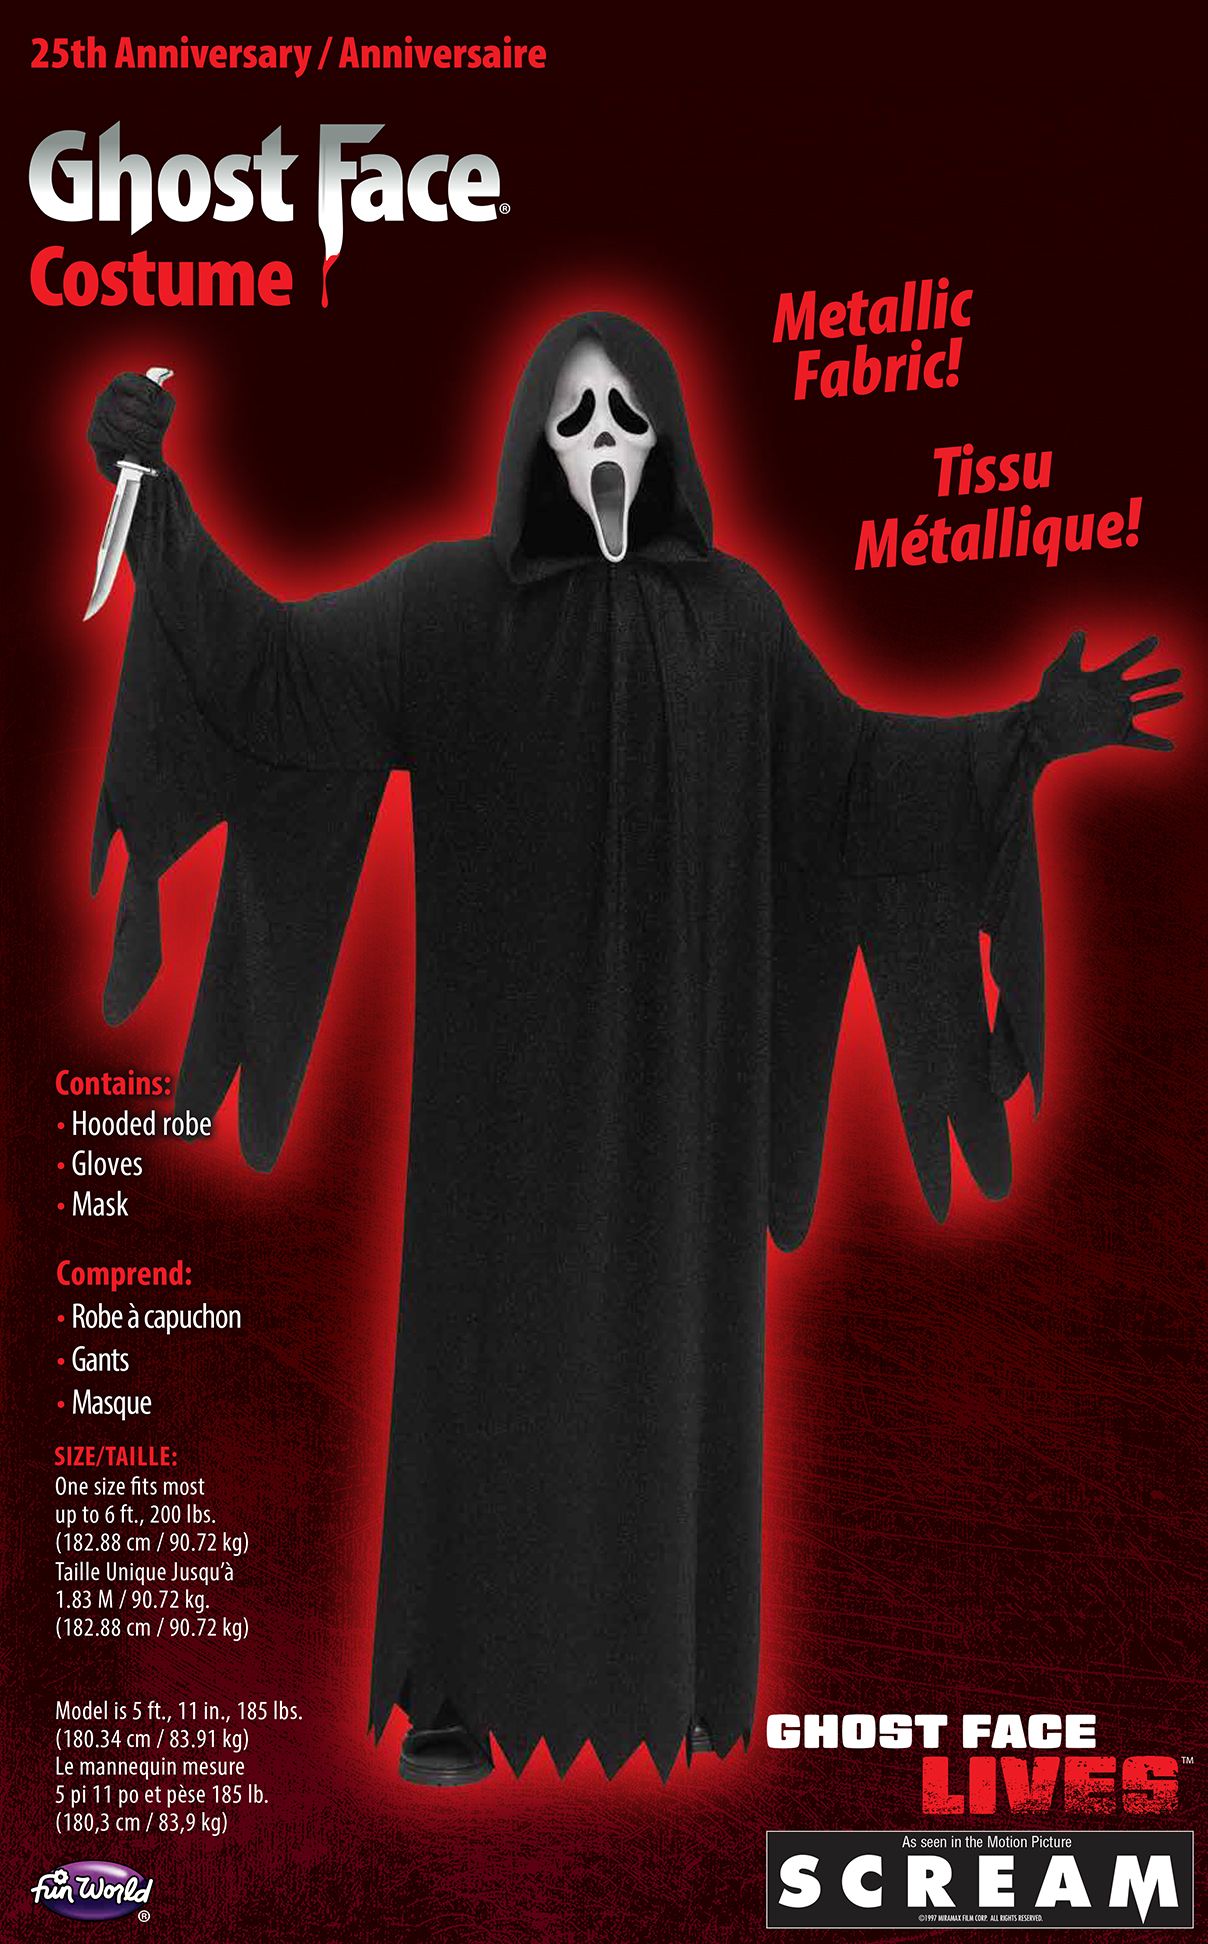 Scream 25th anniversary costume